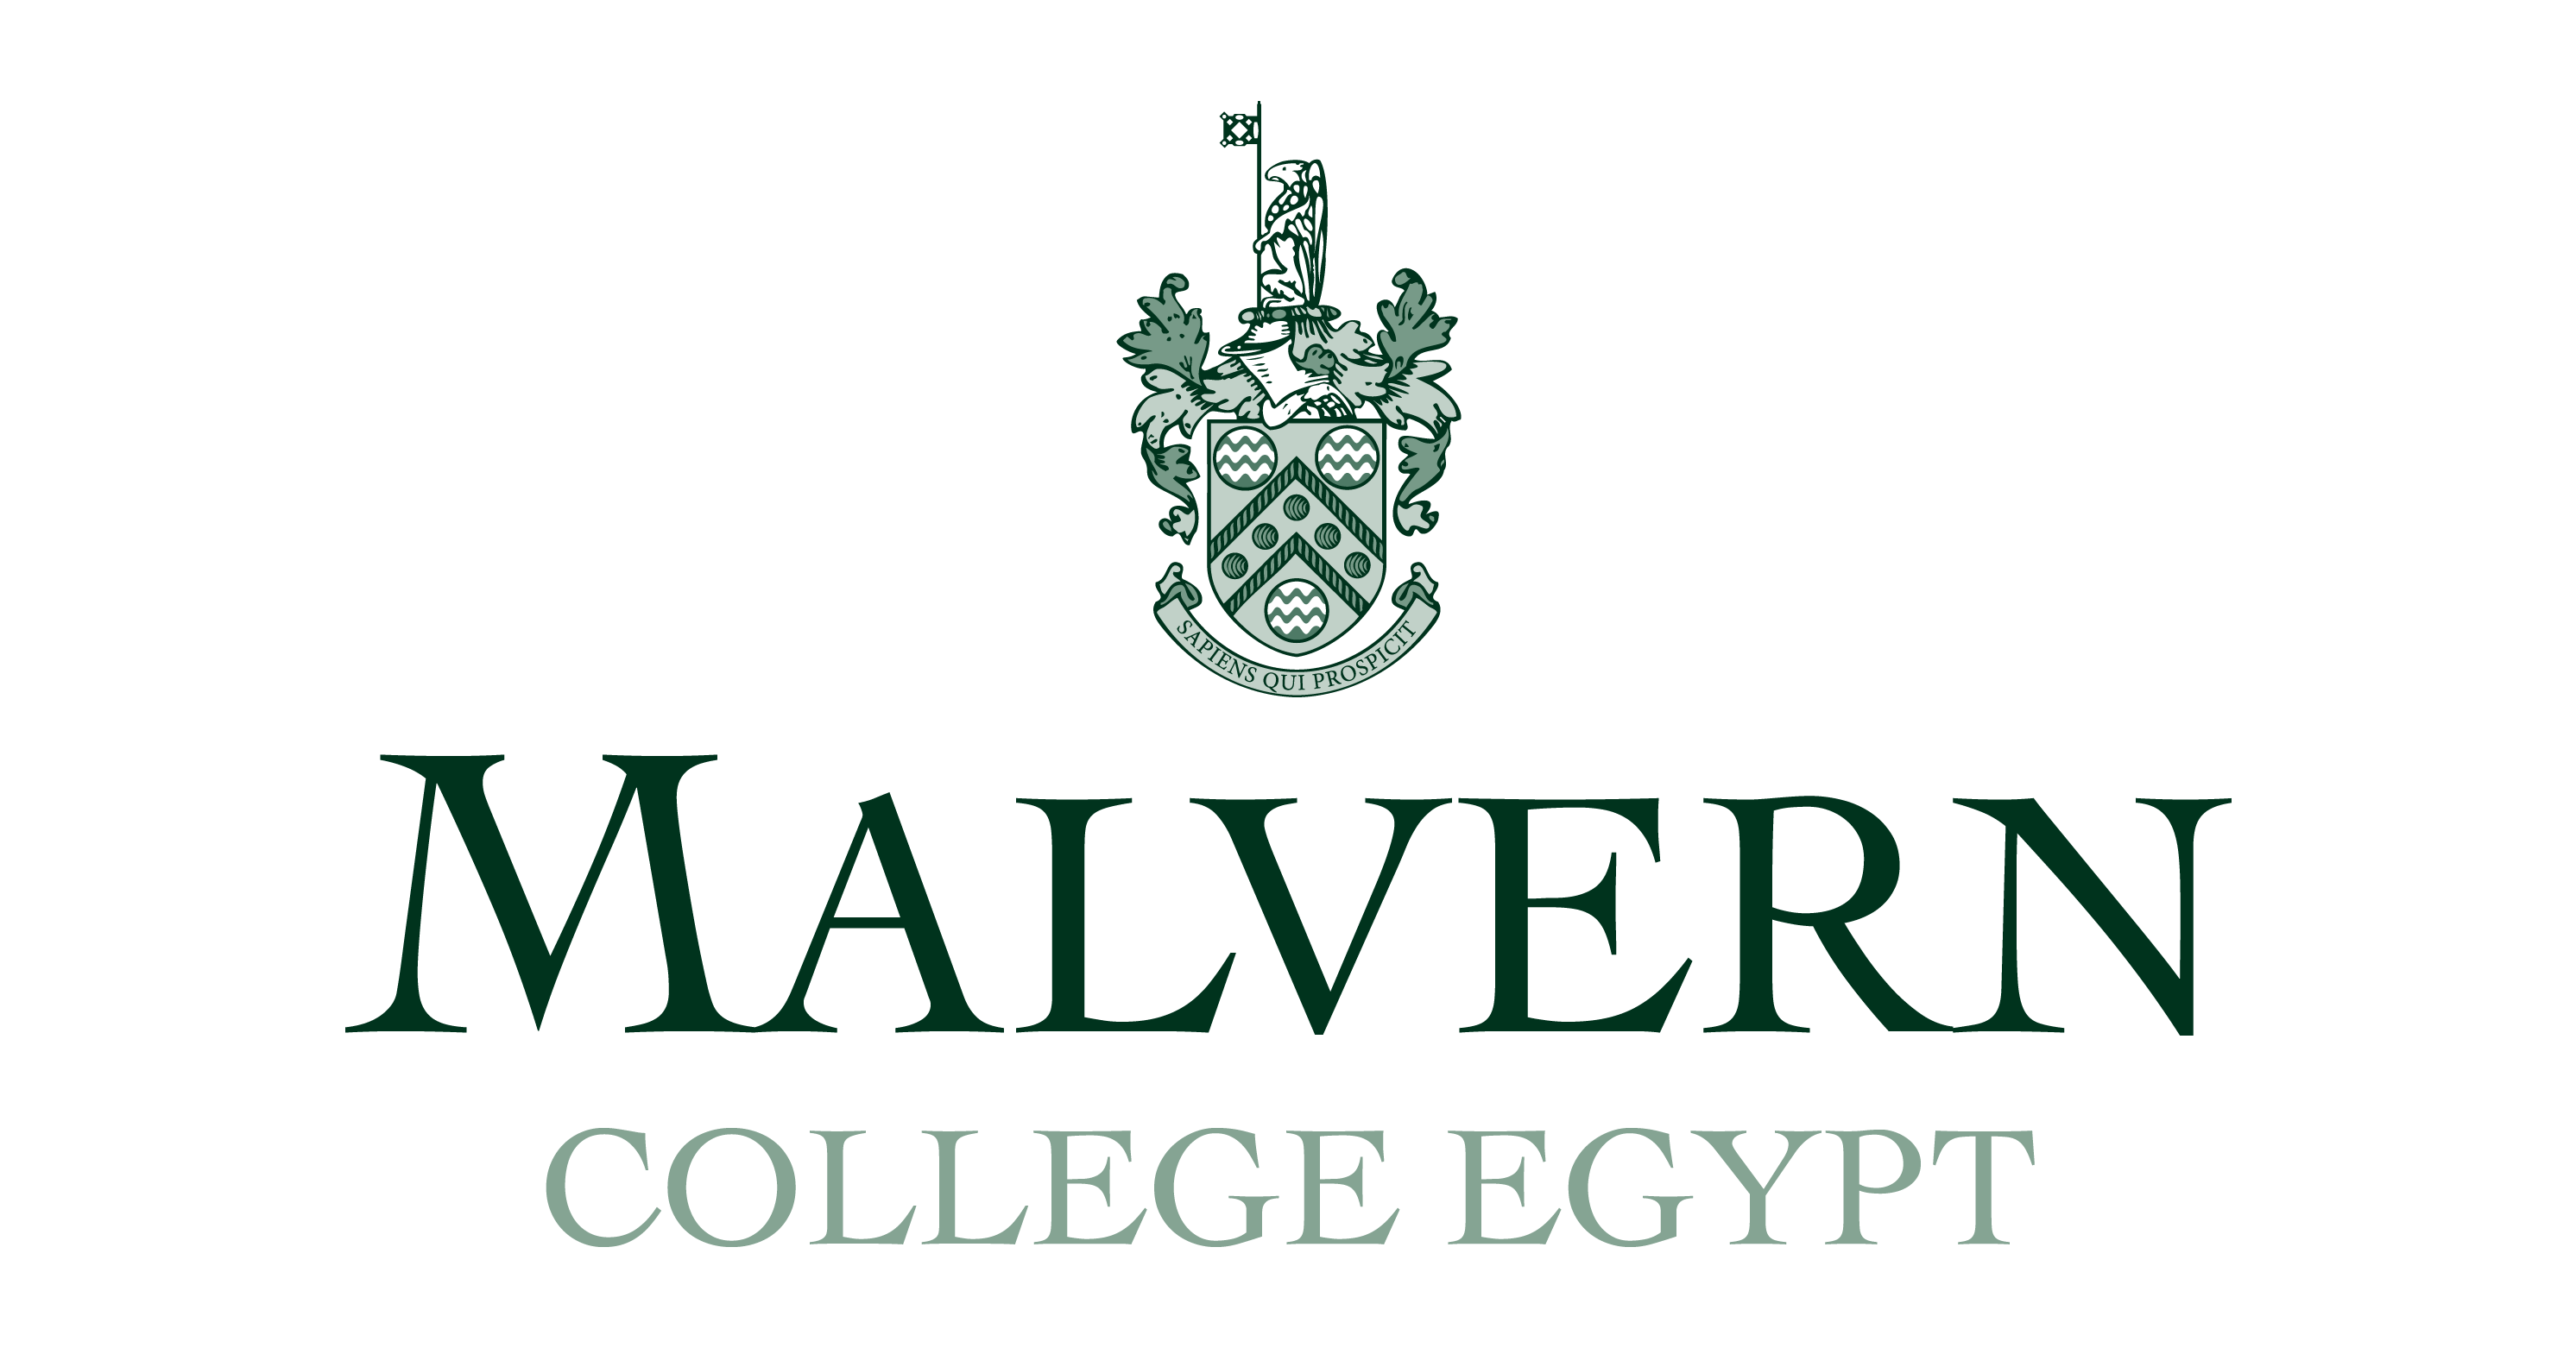 Malvern-College-Egypt-Egypt-22687-1495105607-og.png